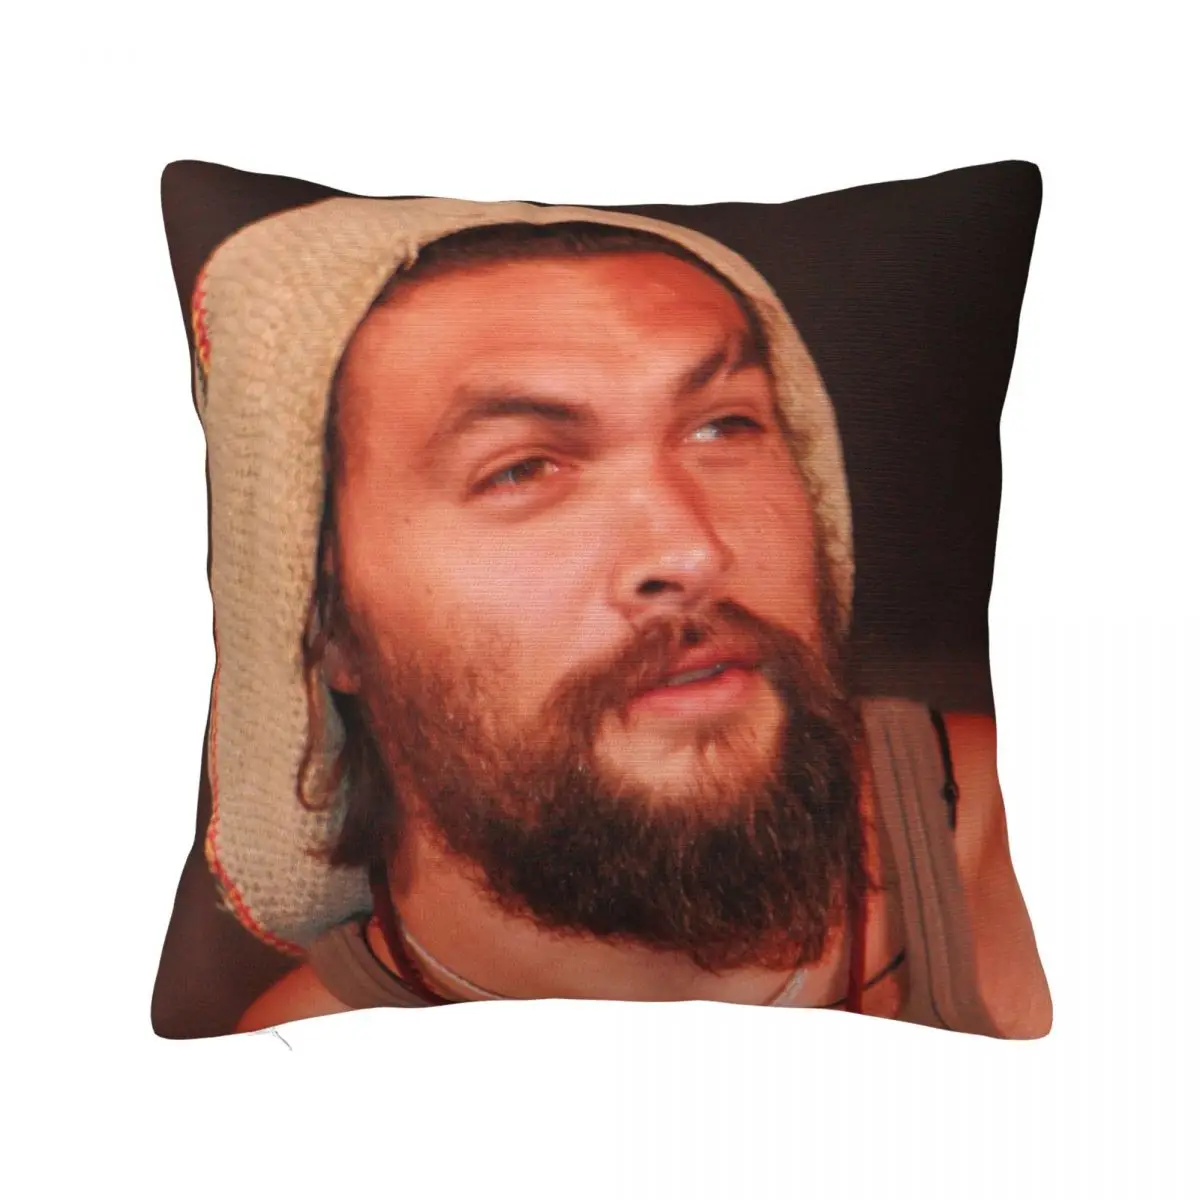 

Jason Momoa Pillowcase Soft Polyester Cushion Cover Decorative Movie Actor Pillow Case Cover Home Dropshipping 45*45cm